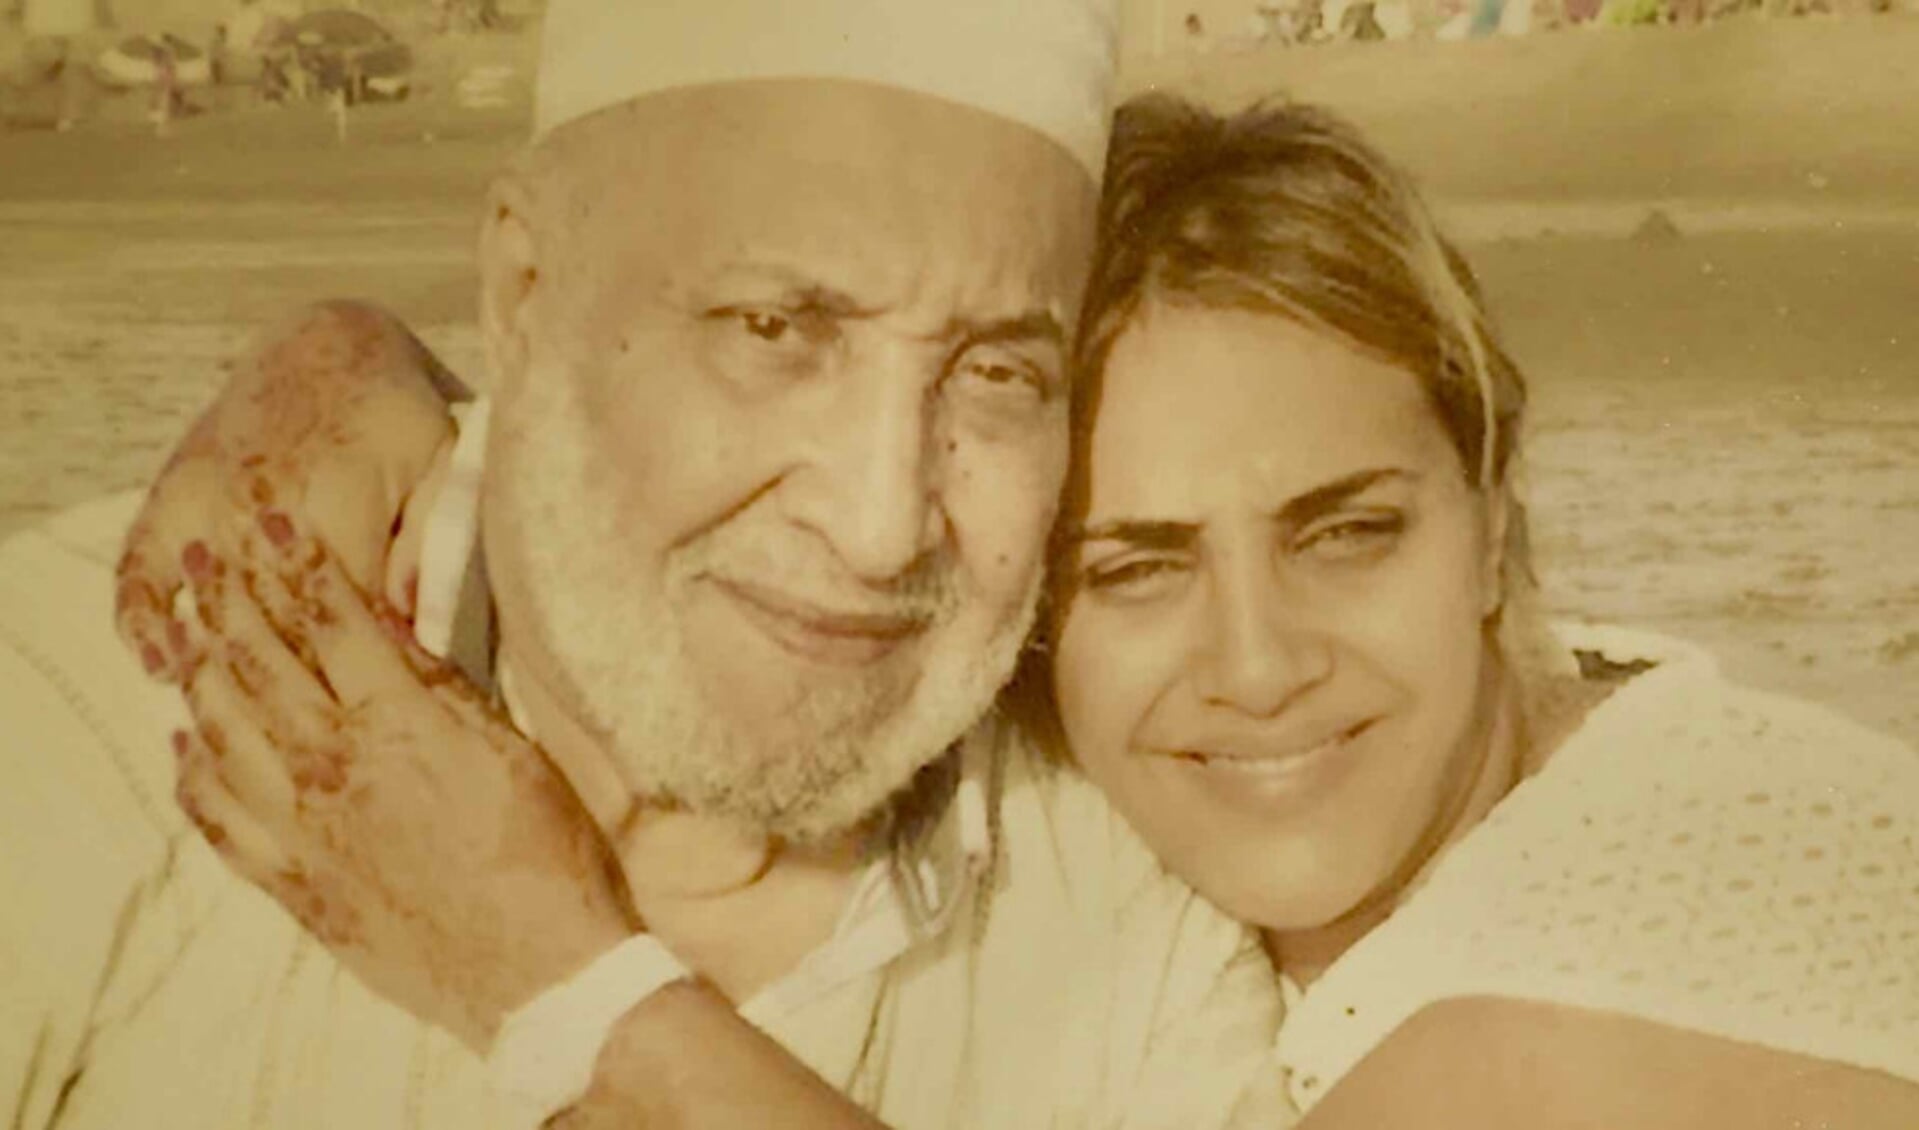  Hajia samen met haar vader Abdellah Zaki.